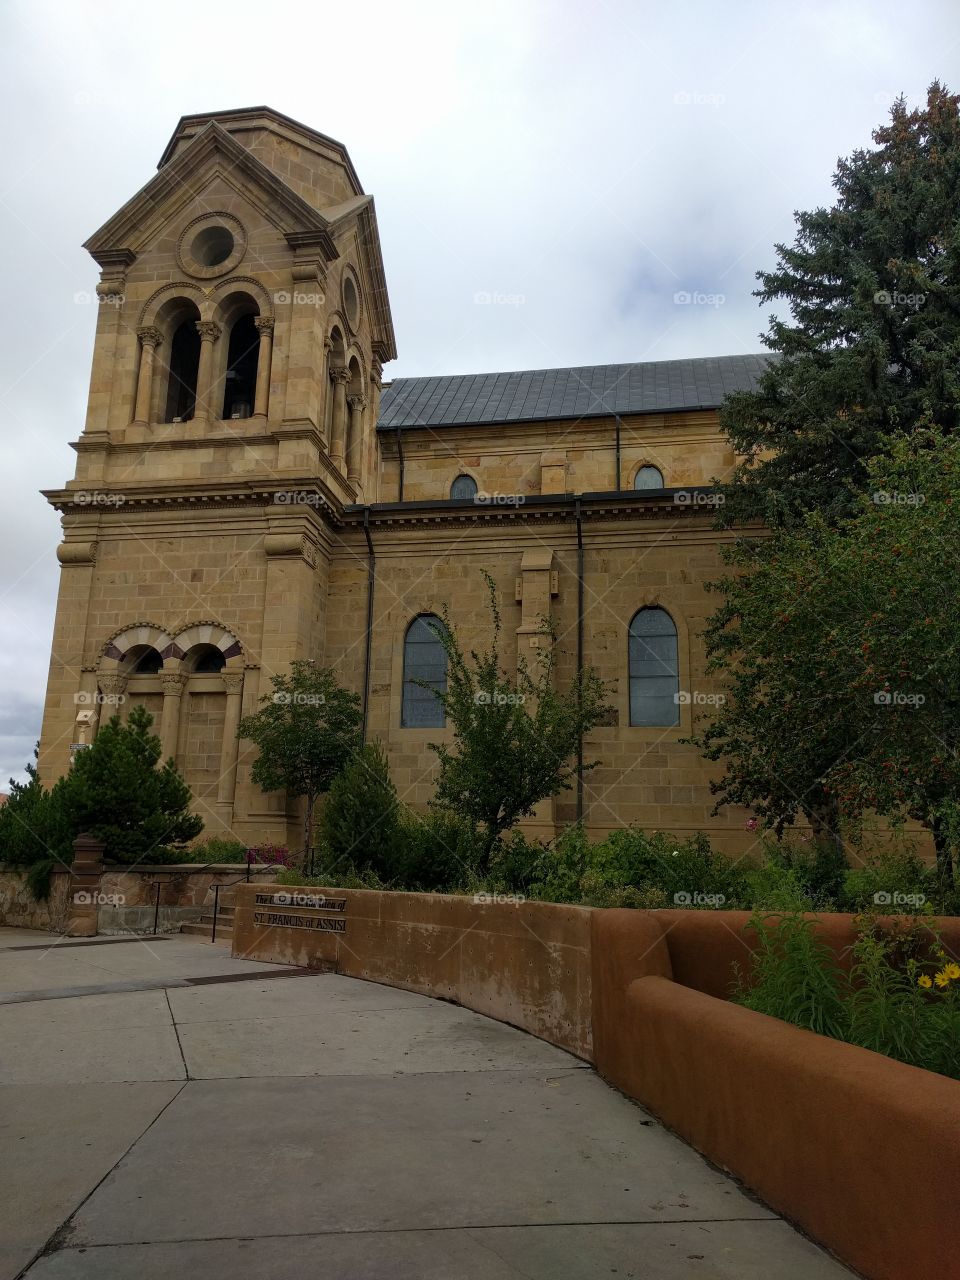 Cathedral, Santa Fe, NM